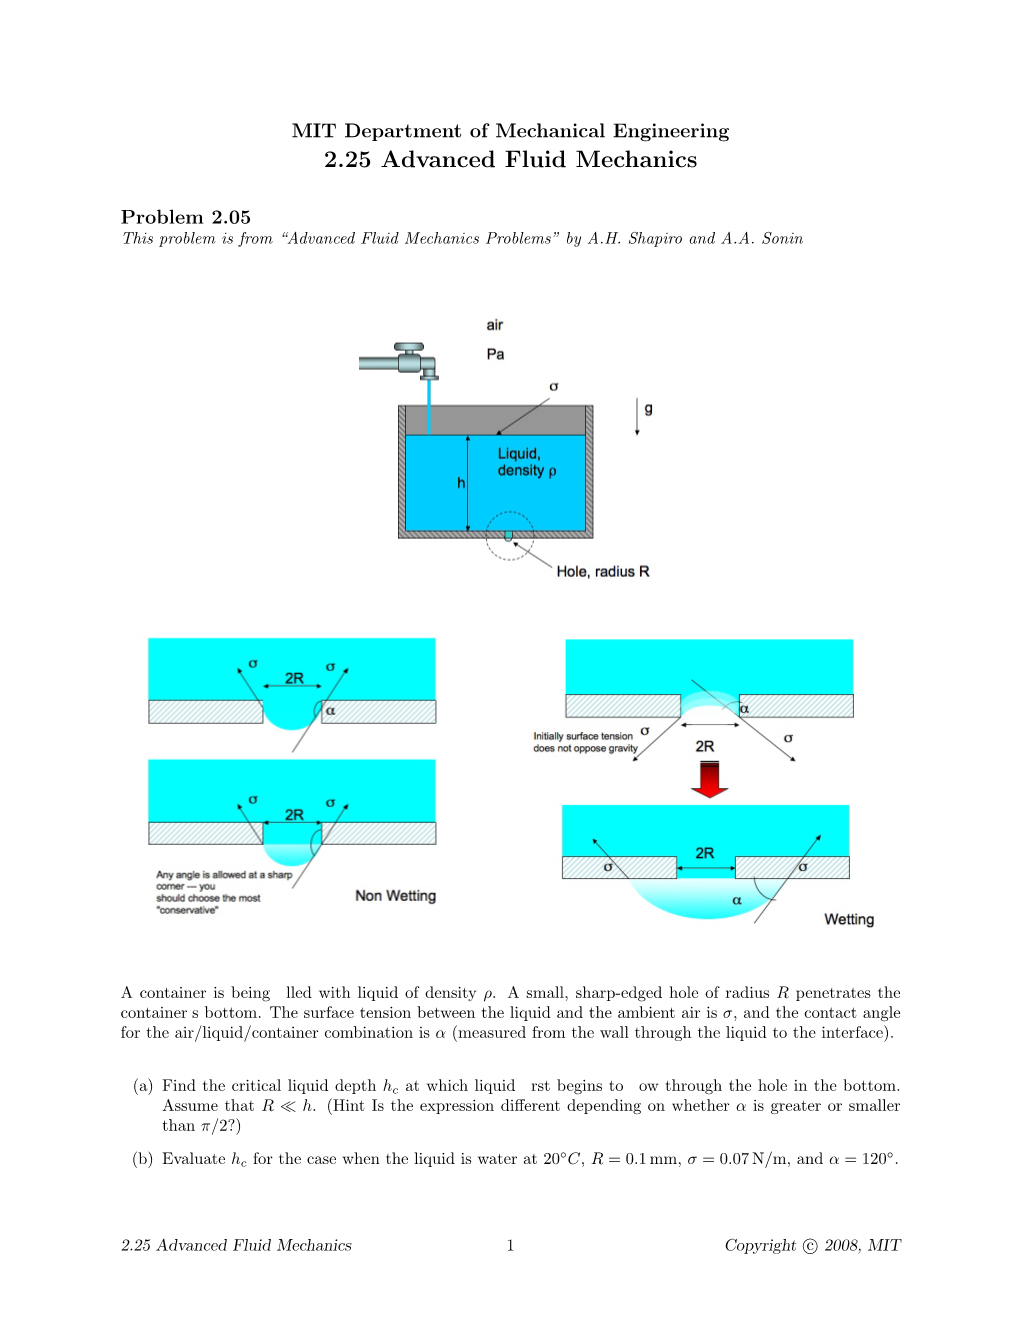 2.25 Advanced Fluid Mechanics Problem 2.05